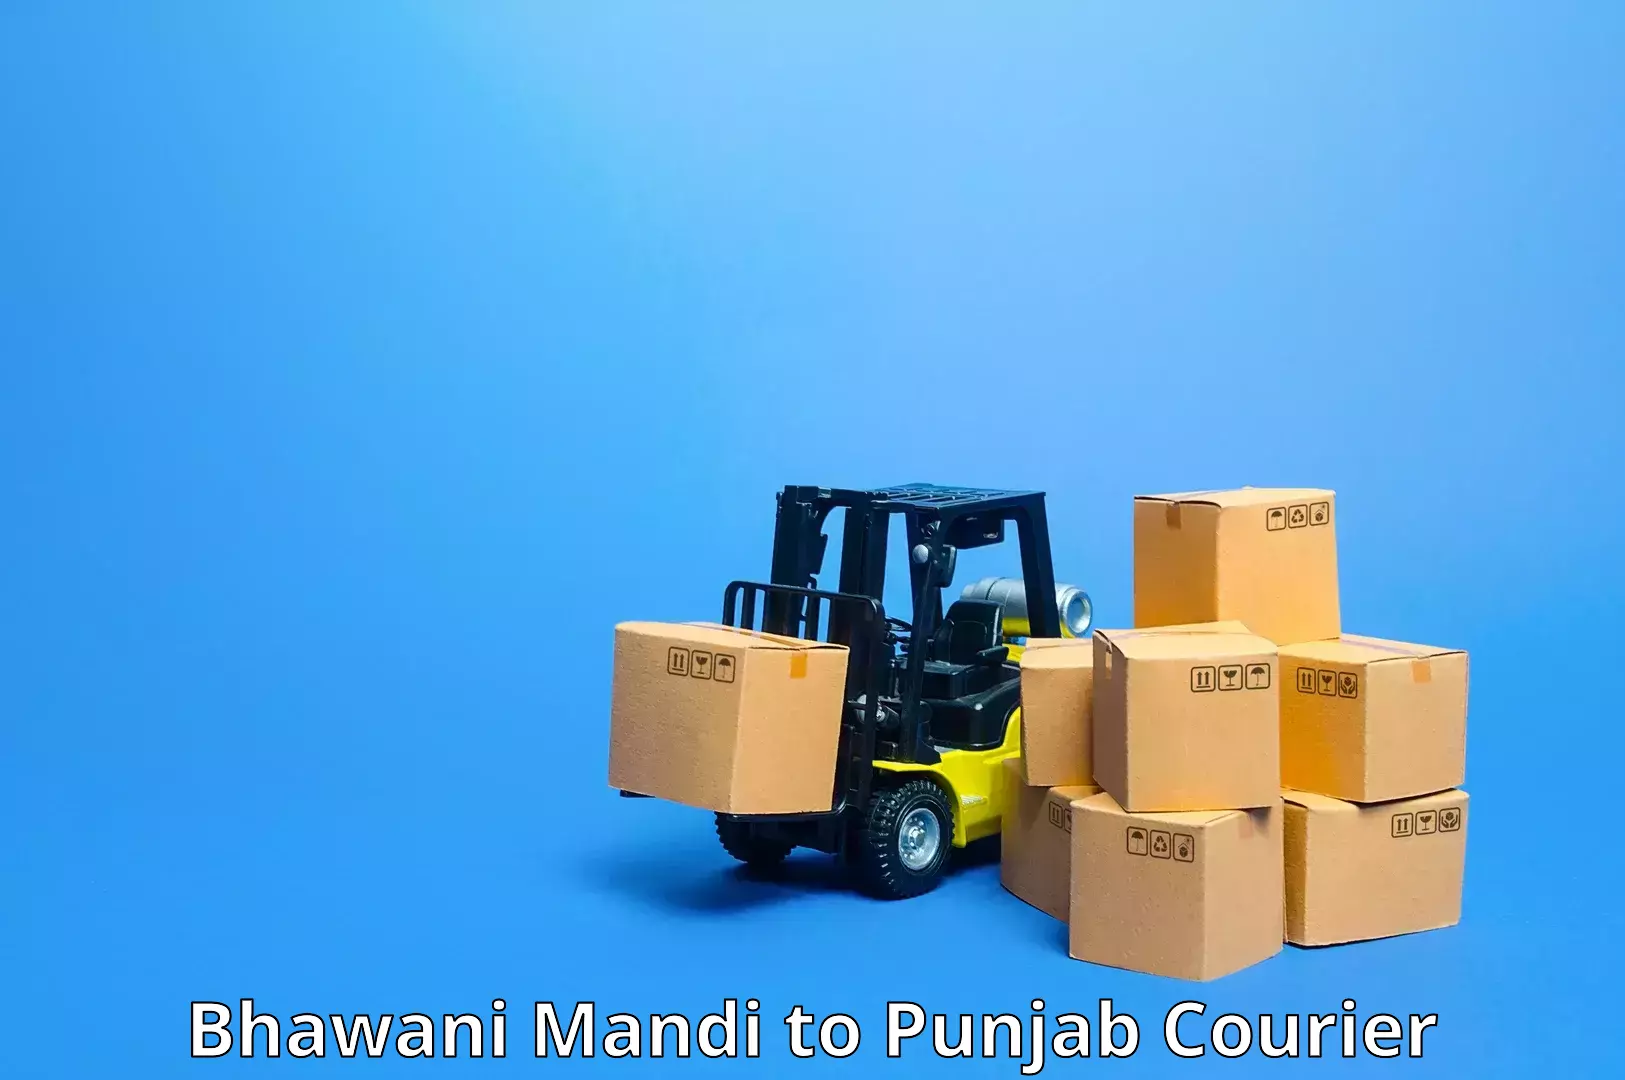 International parcel service Bhawani Mandi to Zirakpur